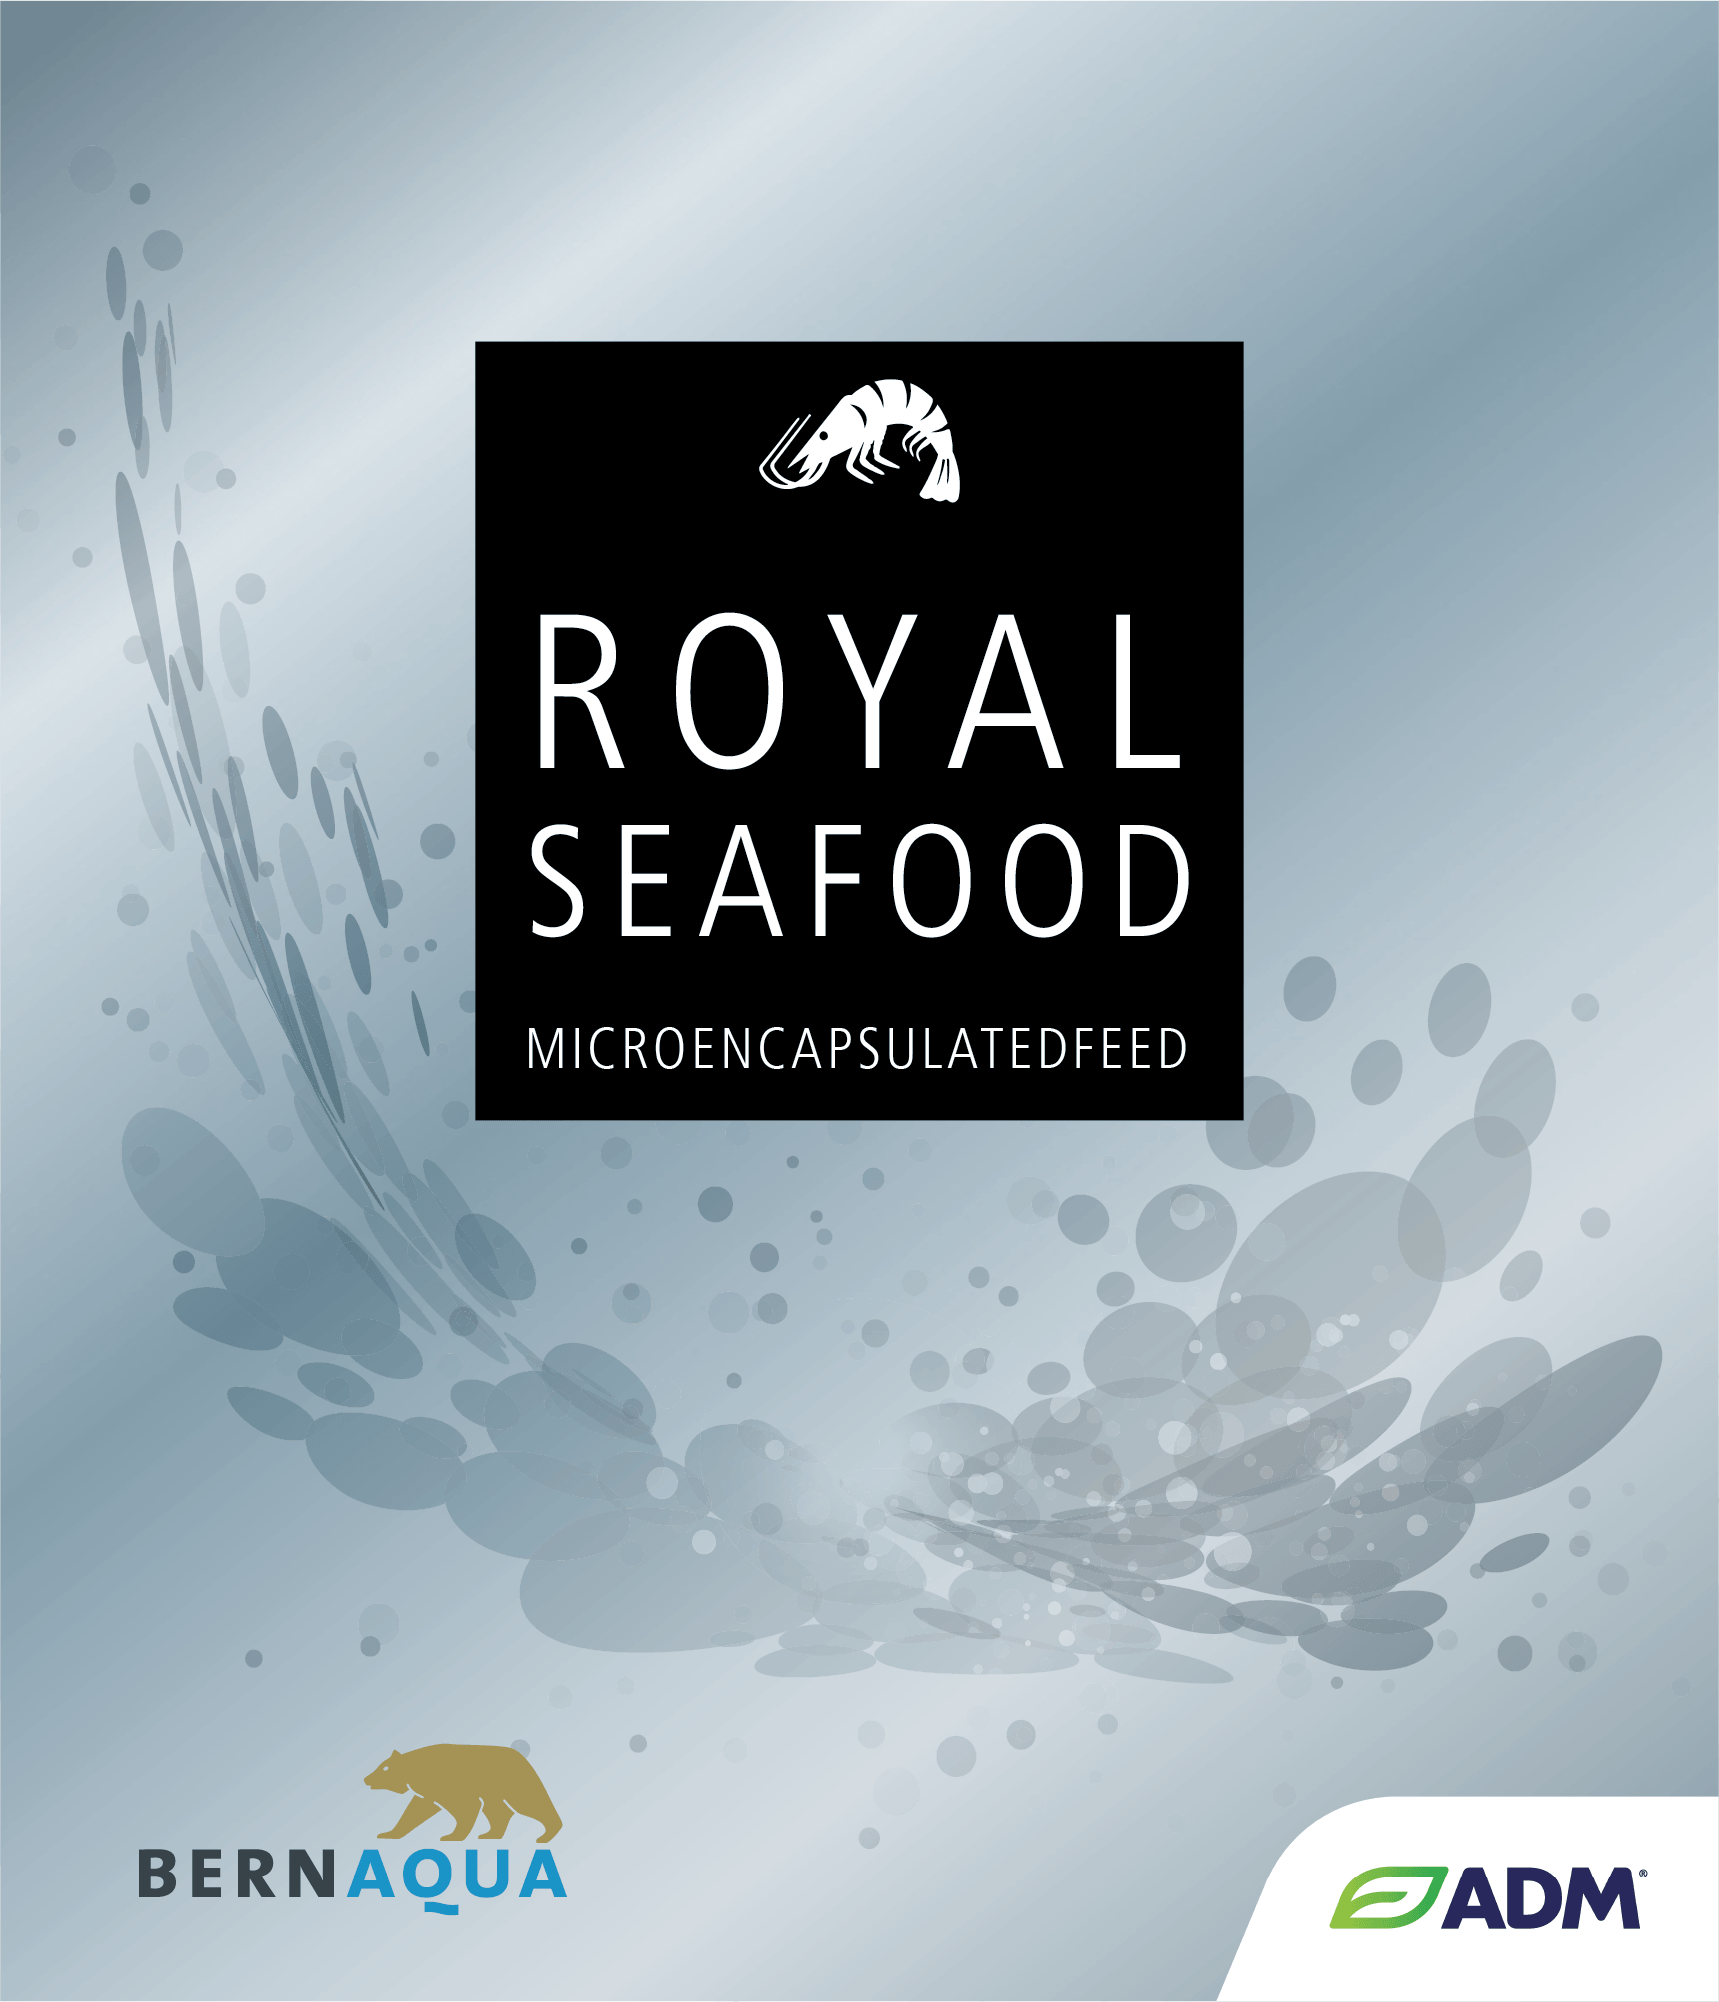 Royal Seafood by BernAqua